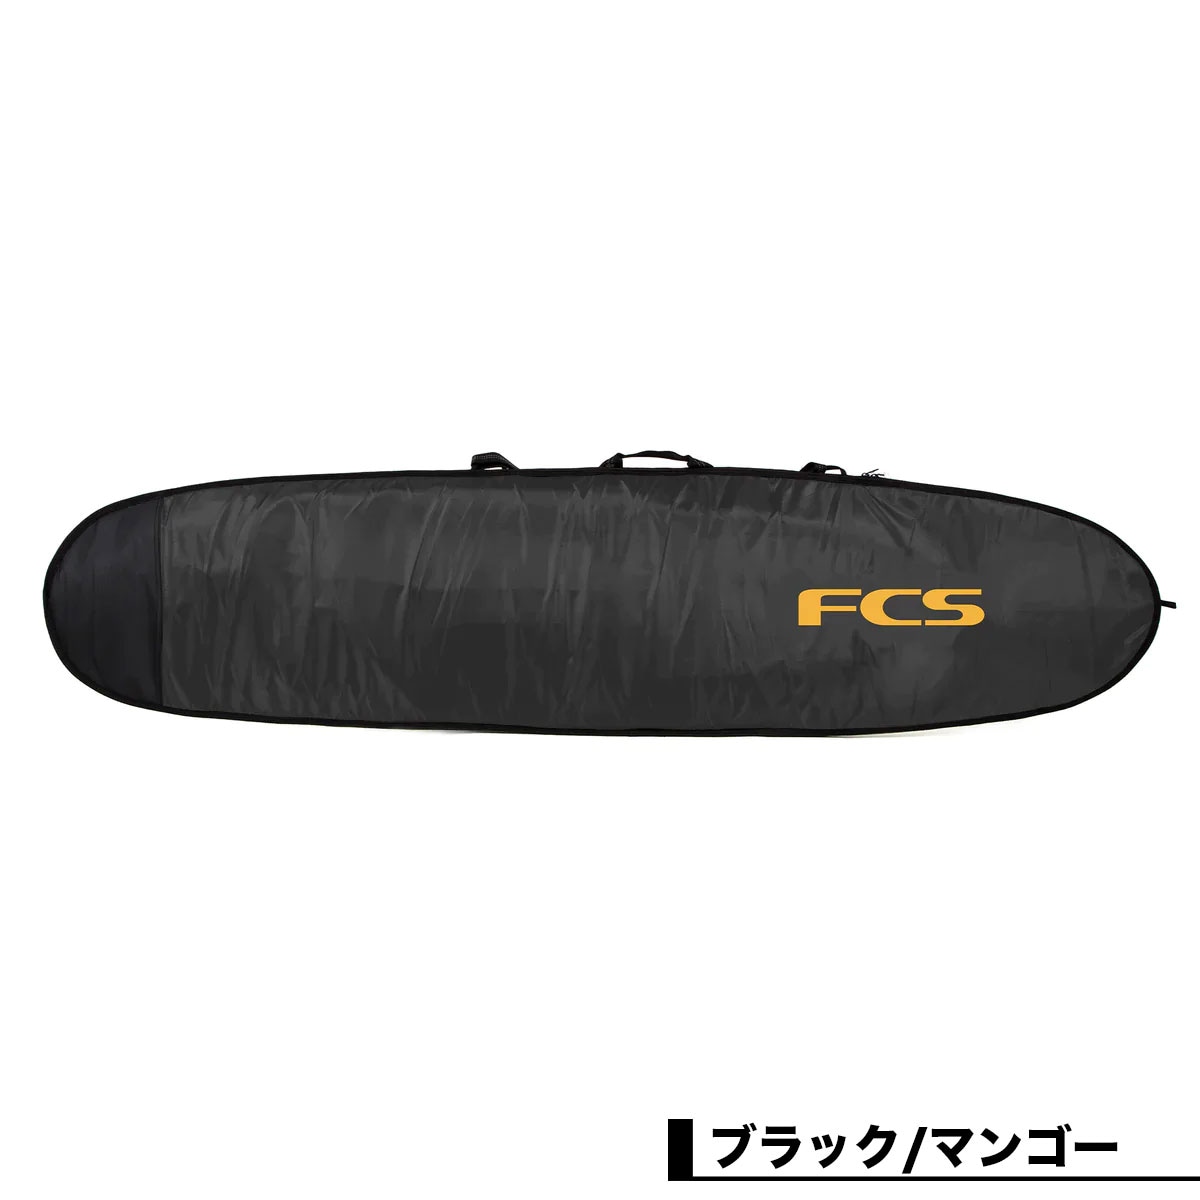 FCS エフシーエス サーフィン ハードケース ロングボードケース サイズ 